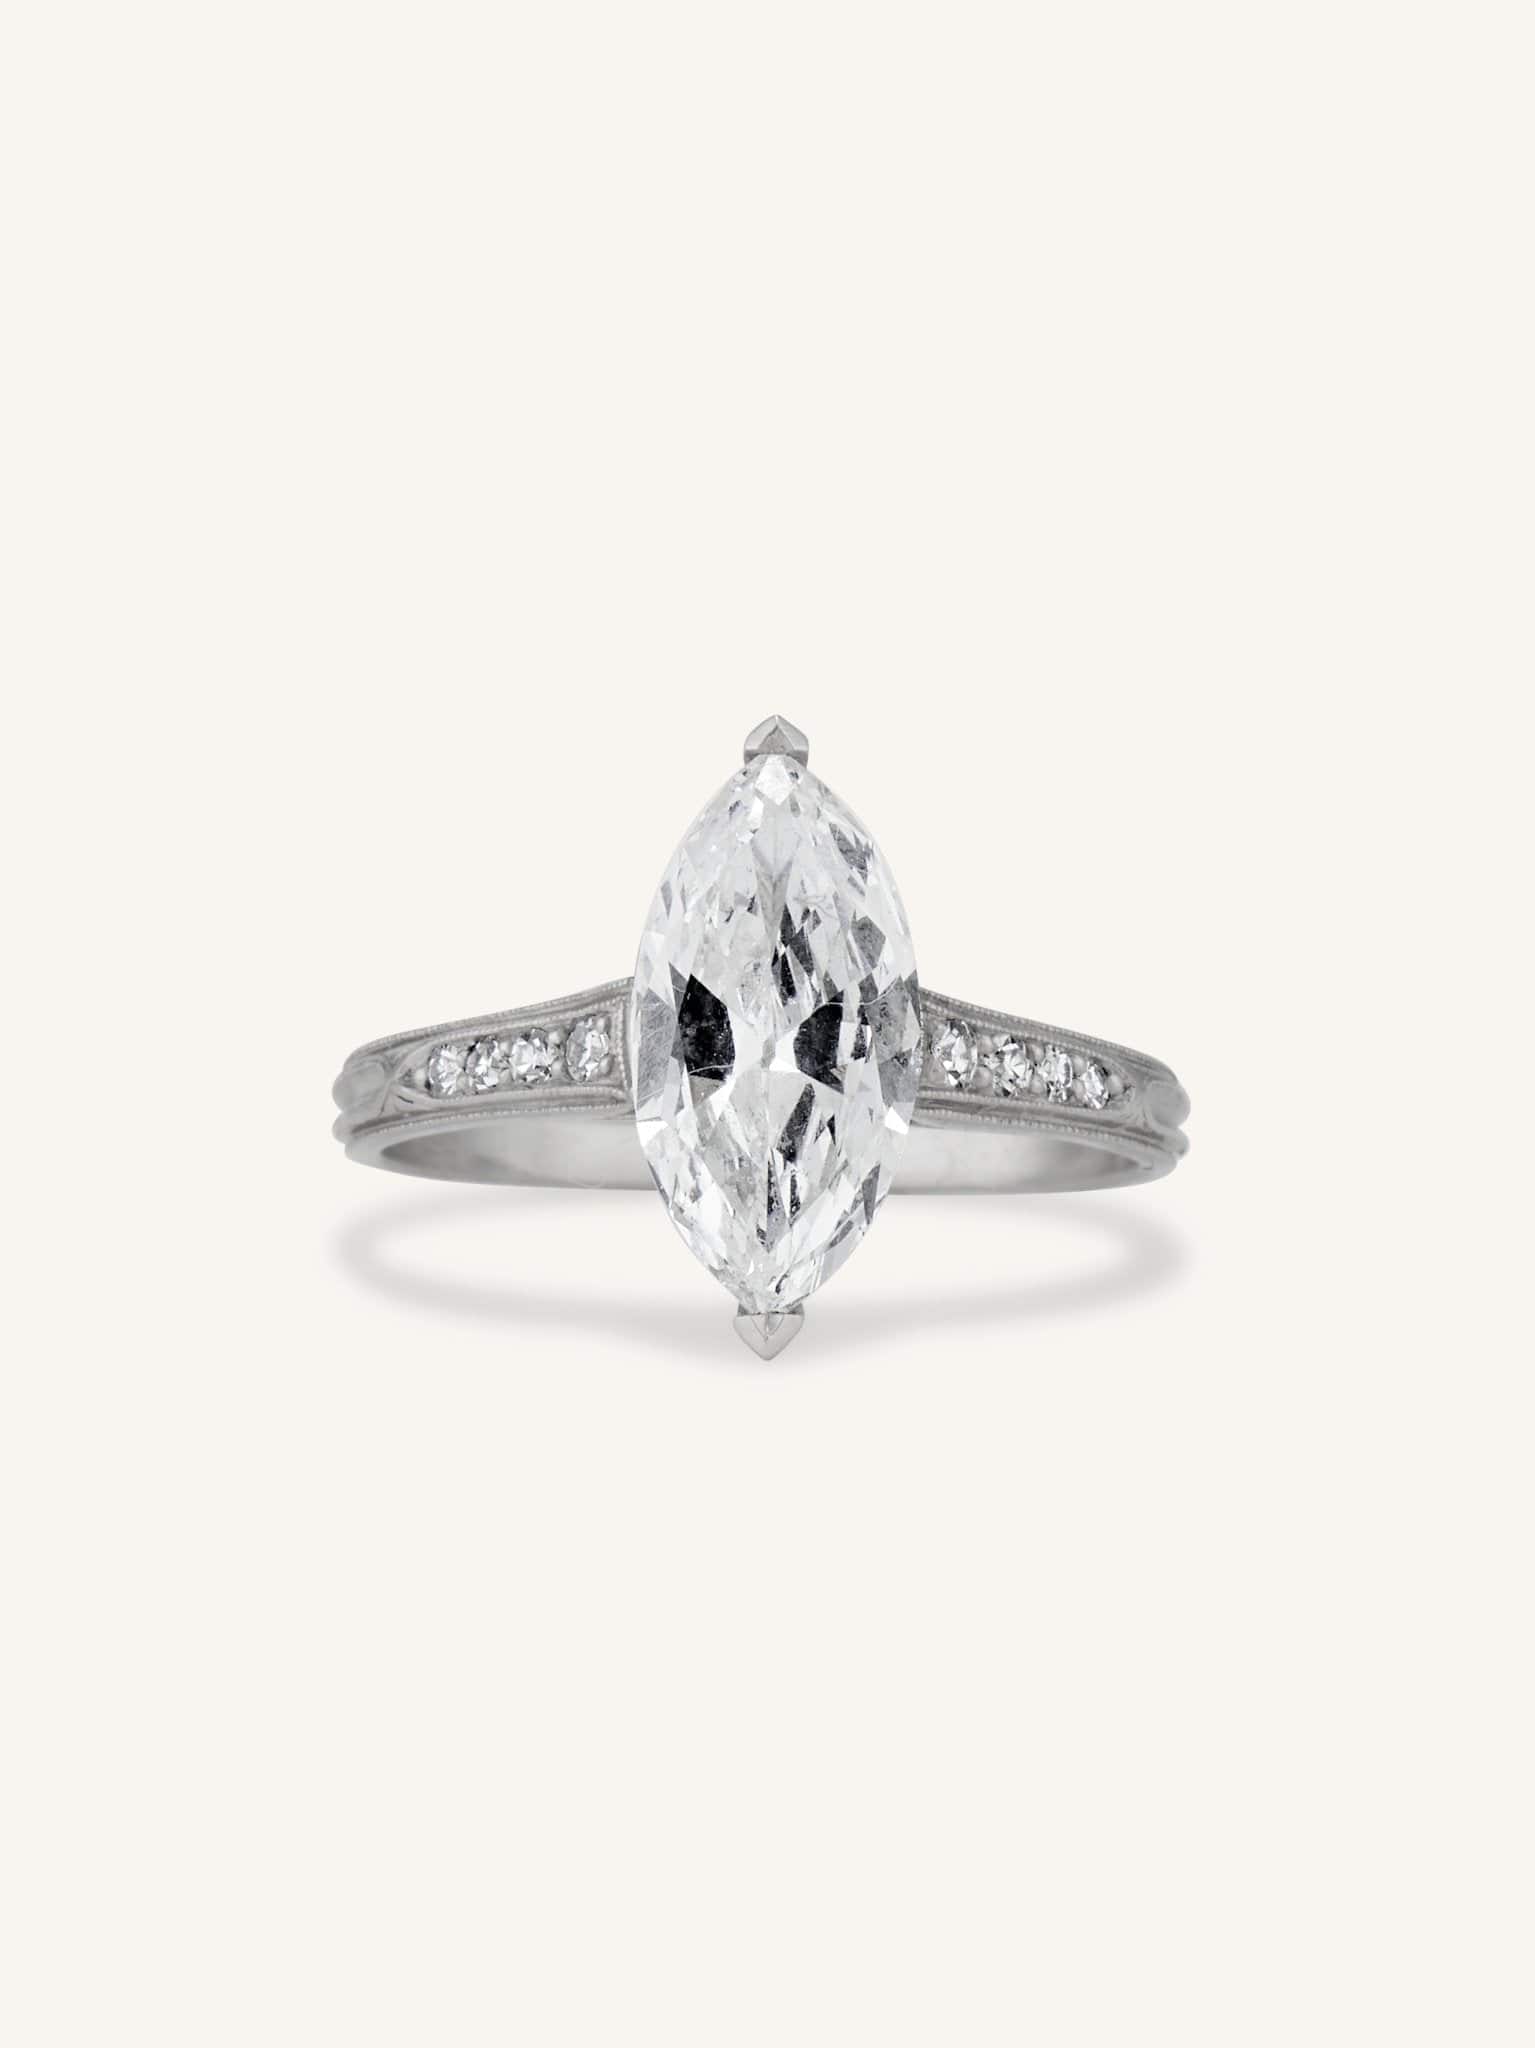 Antique 1920s Art Deco Solid 18ct 18k Gold Platinum Diamond Solitaire Ring  Size O Engagement Wedding Vintage - Etsy